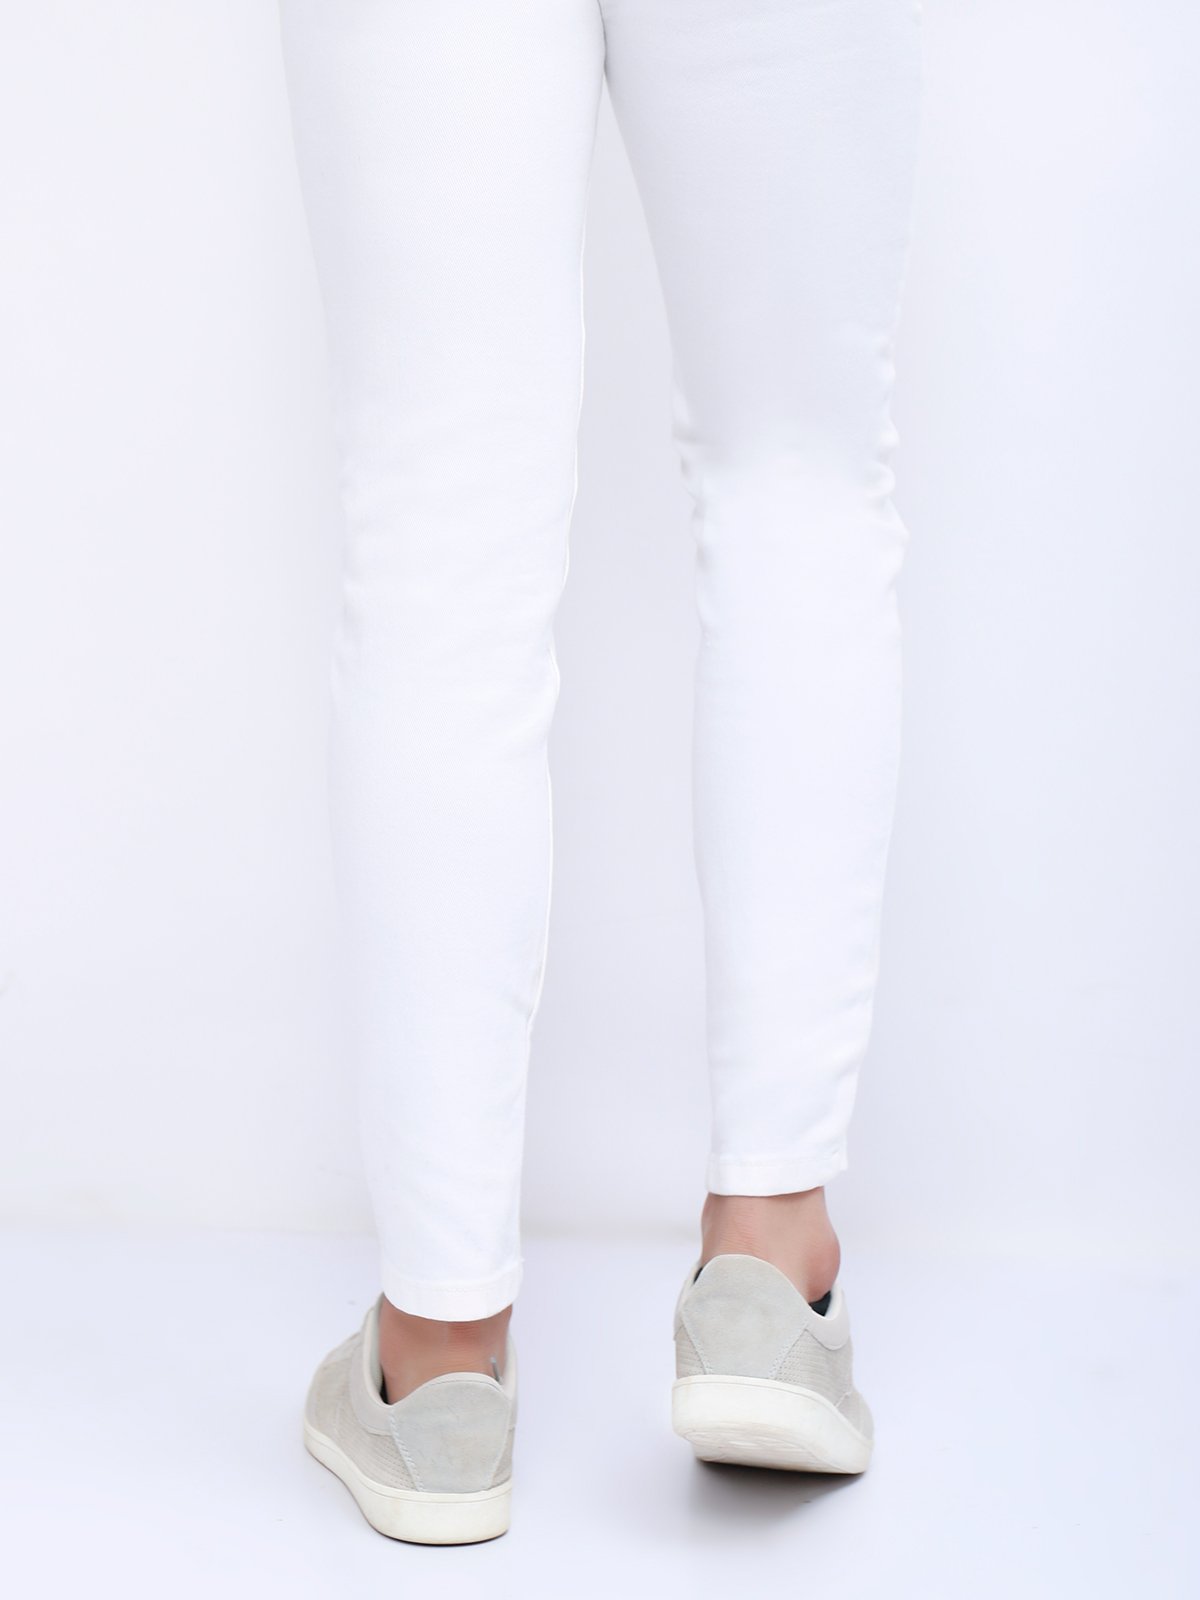 Men's White Denim Jeans - FMBP20-015